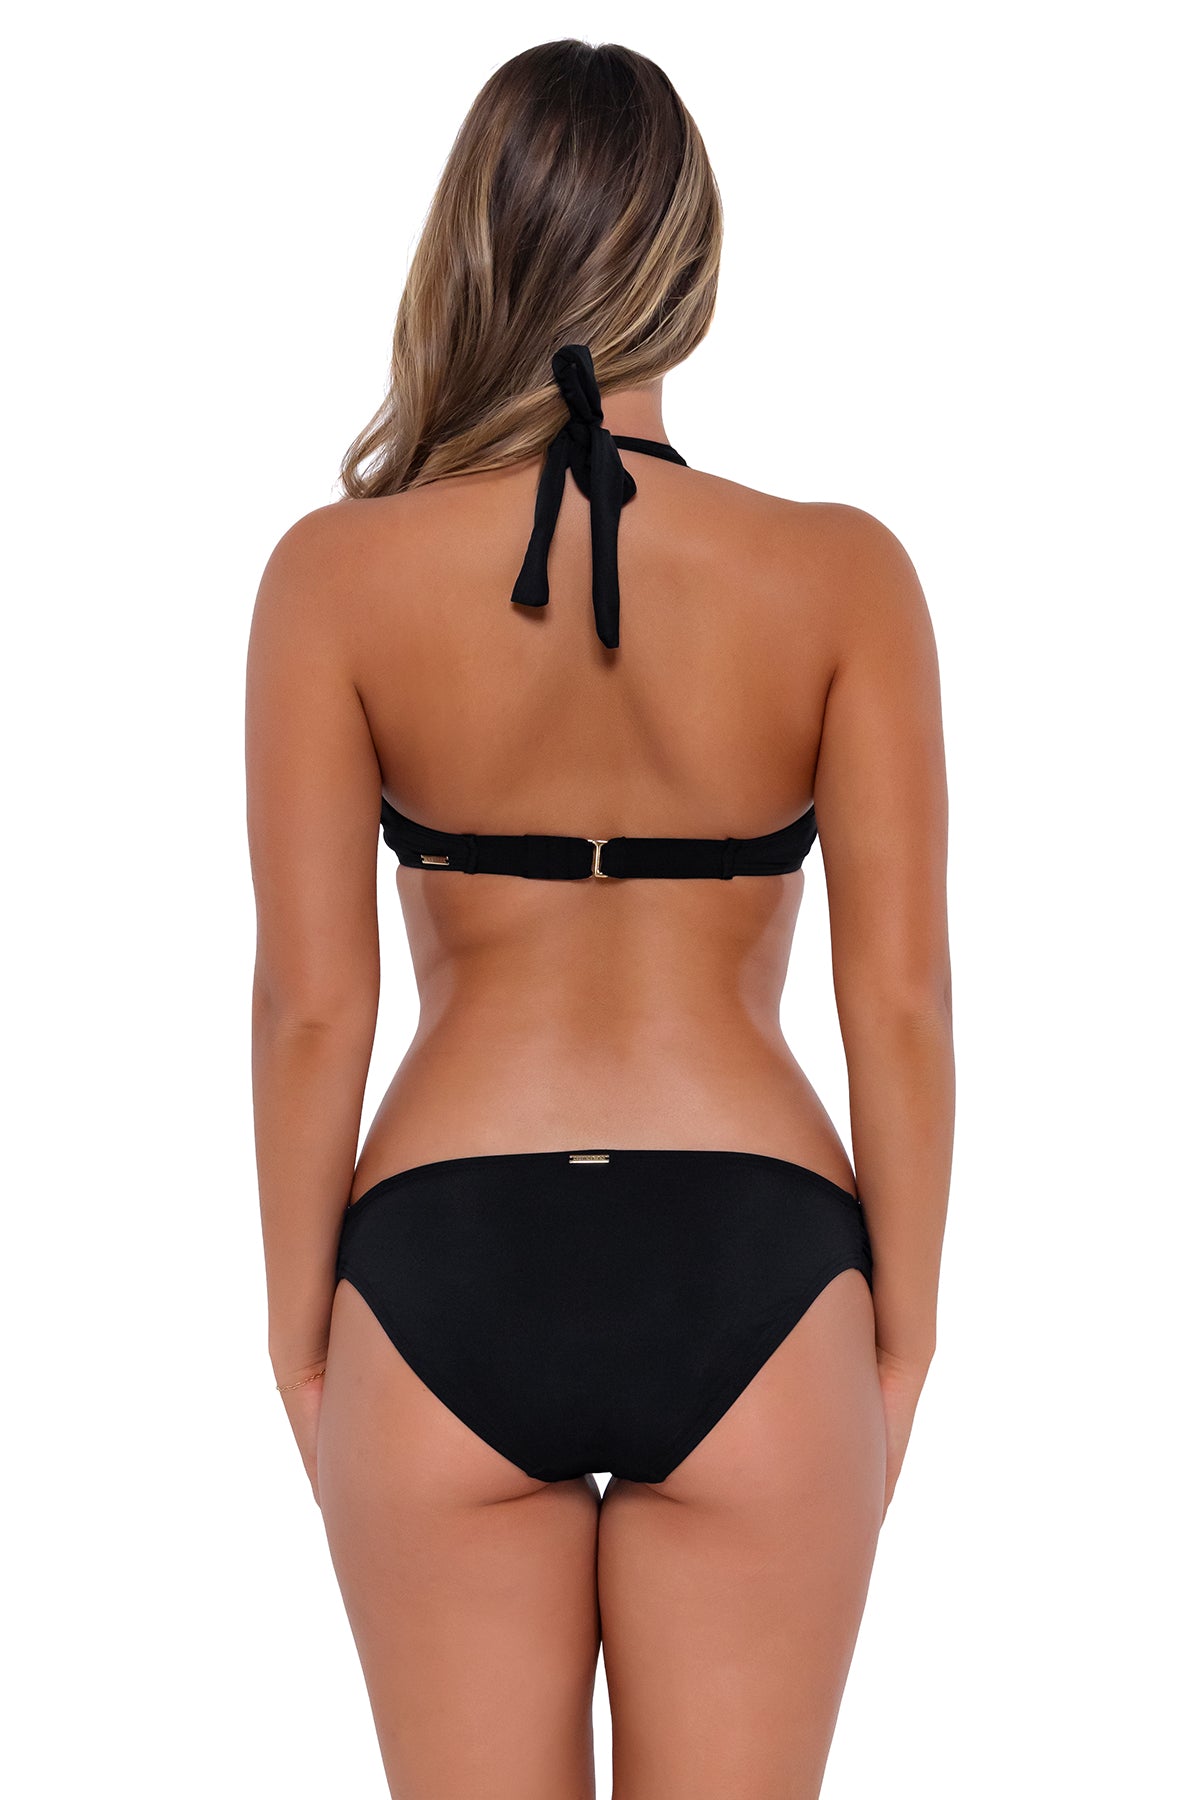 Isla Bonita Muse Halter, Underwire Bikini Top